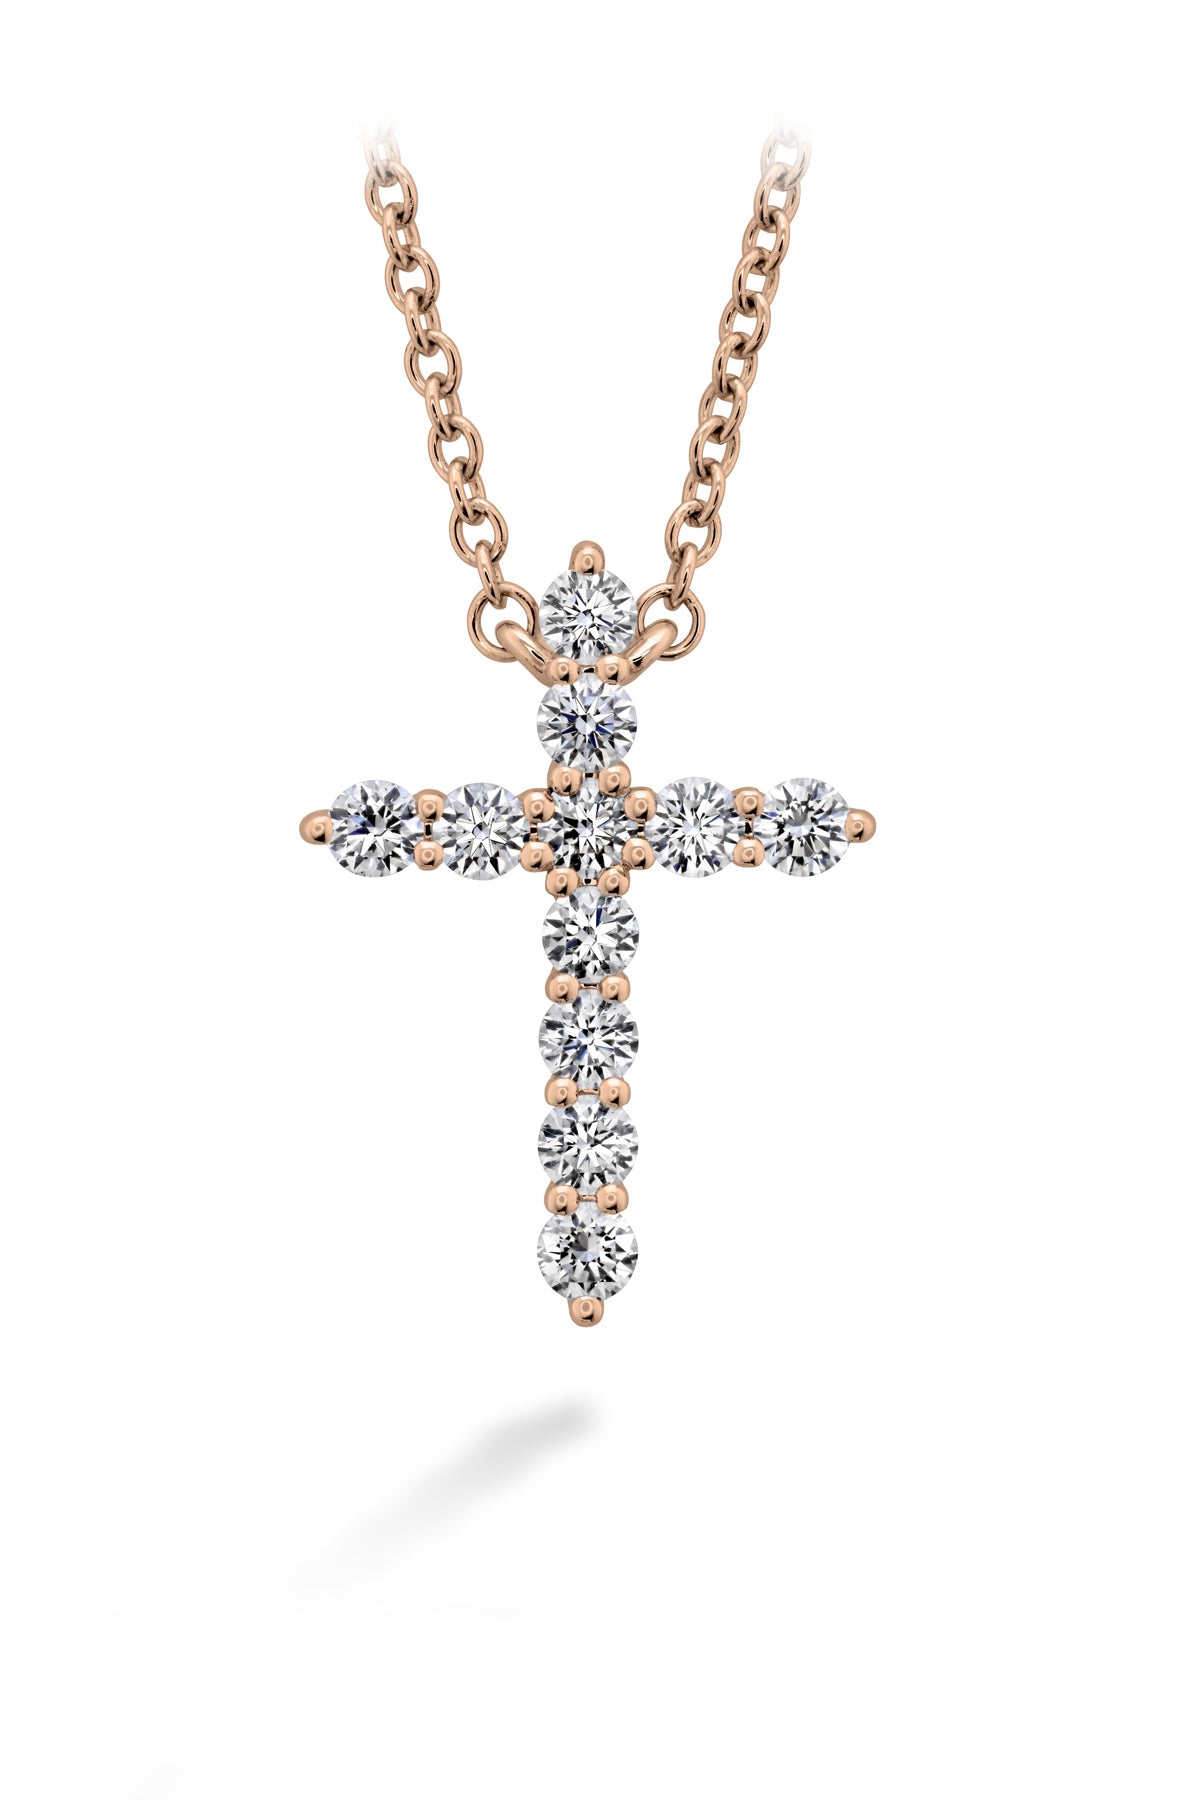 Medium Signature Cross Pendant From Hearts On Fire available at LeGassick Diamonds and Jewellery Gold Coast, Australia.